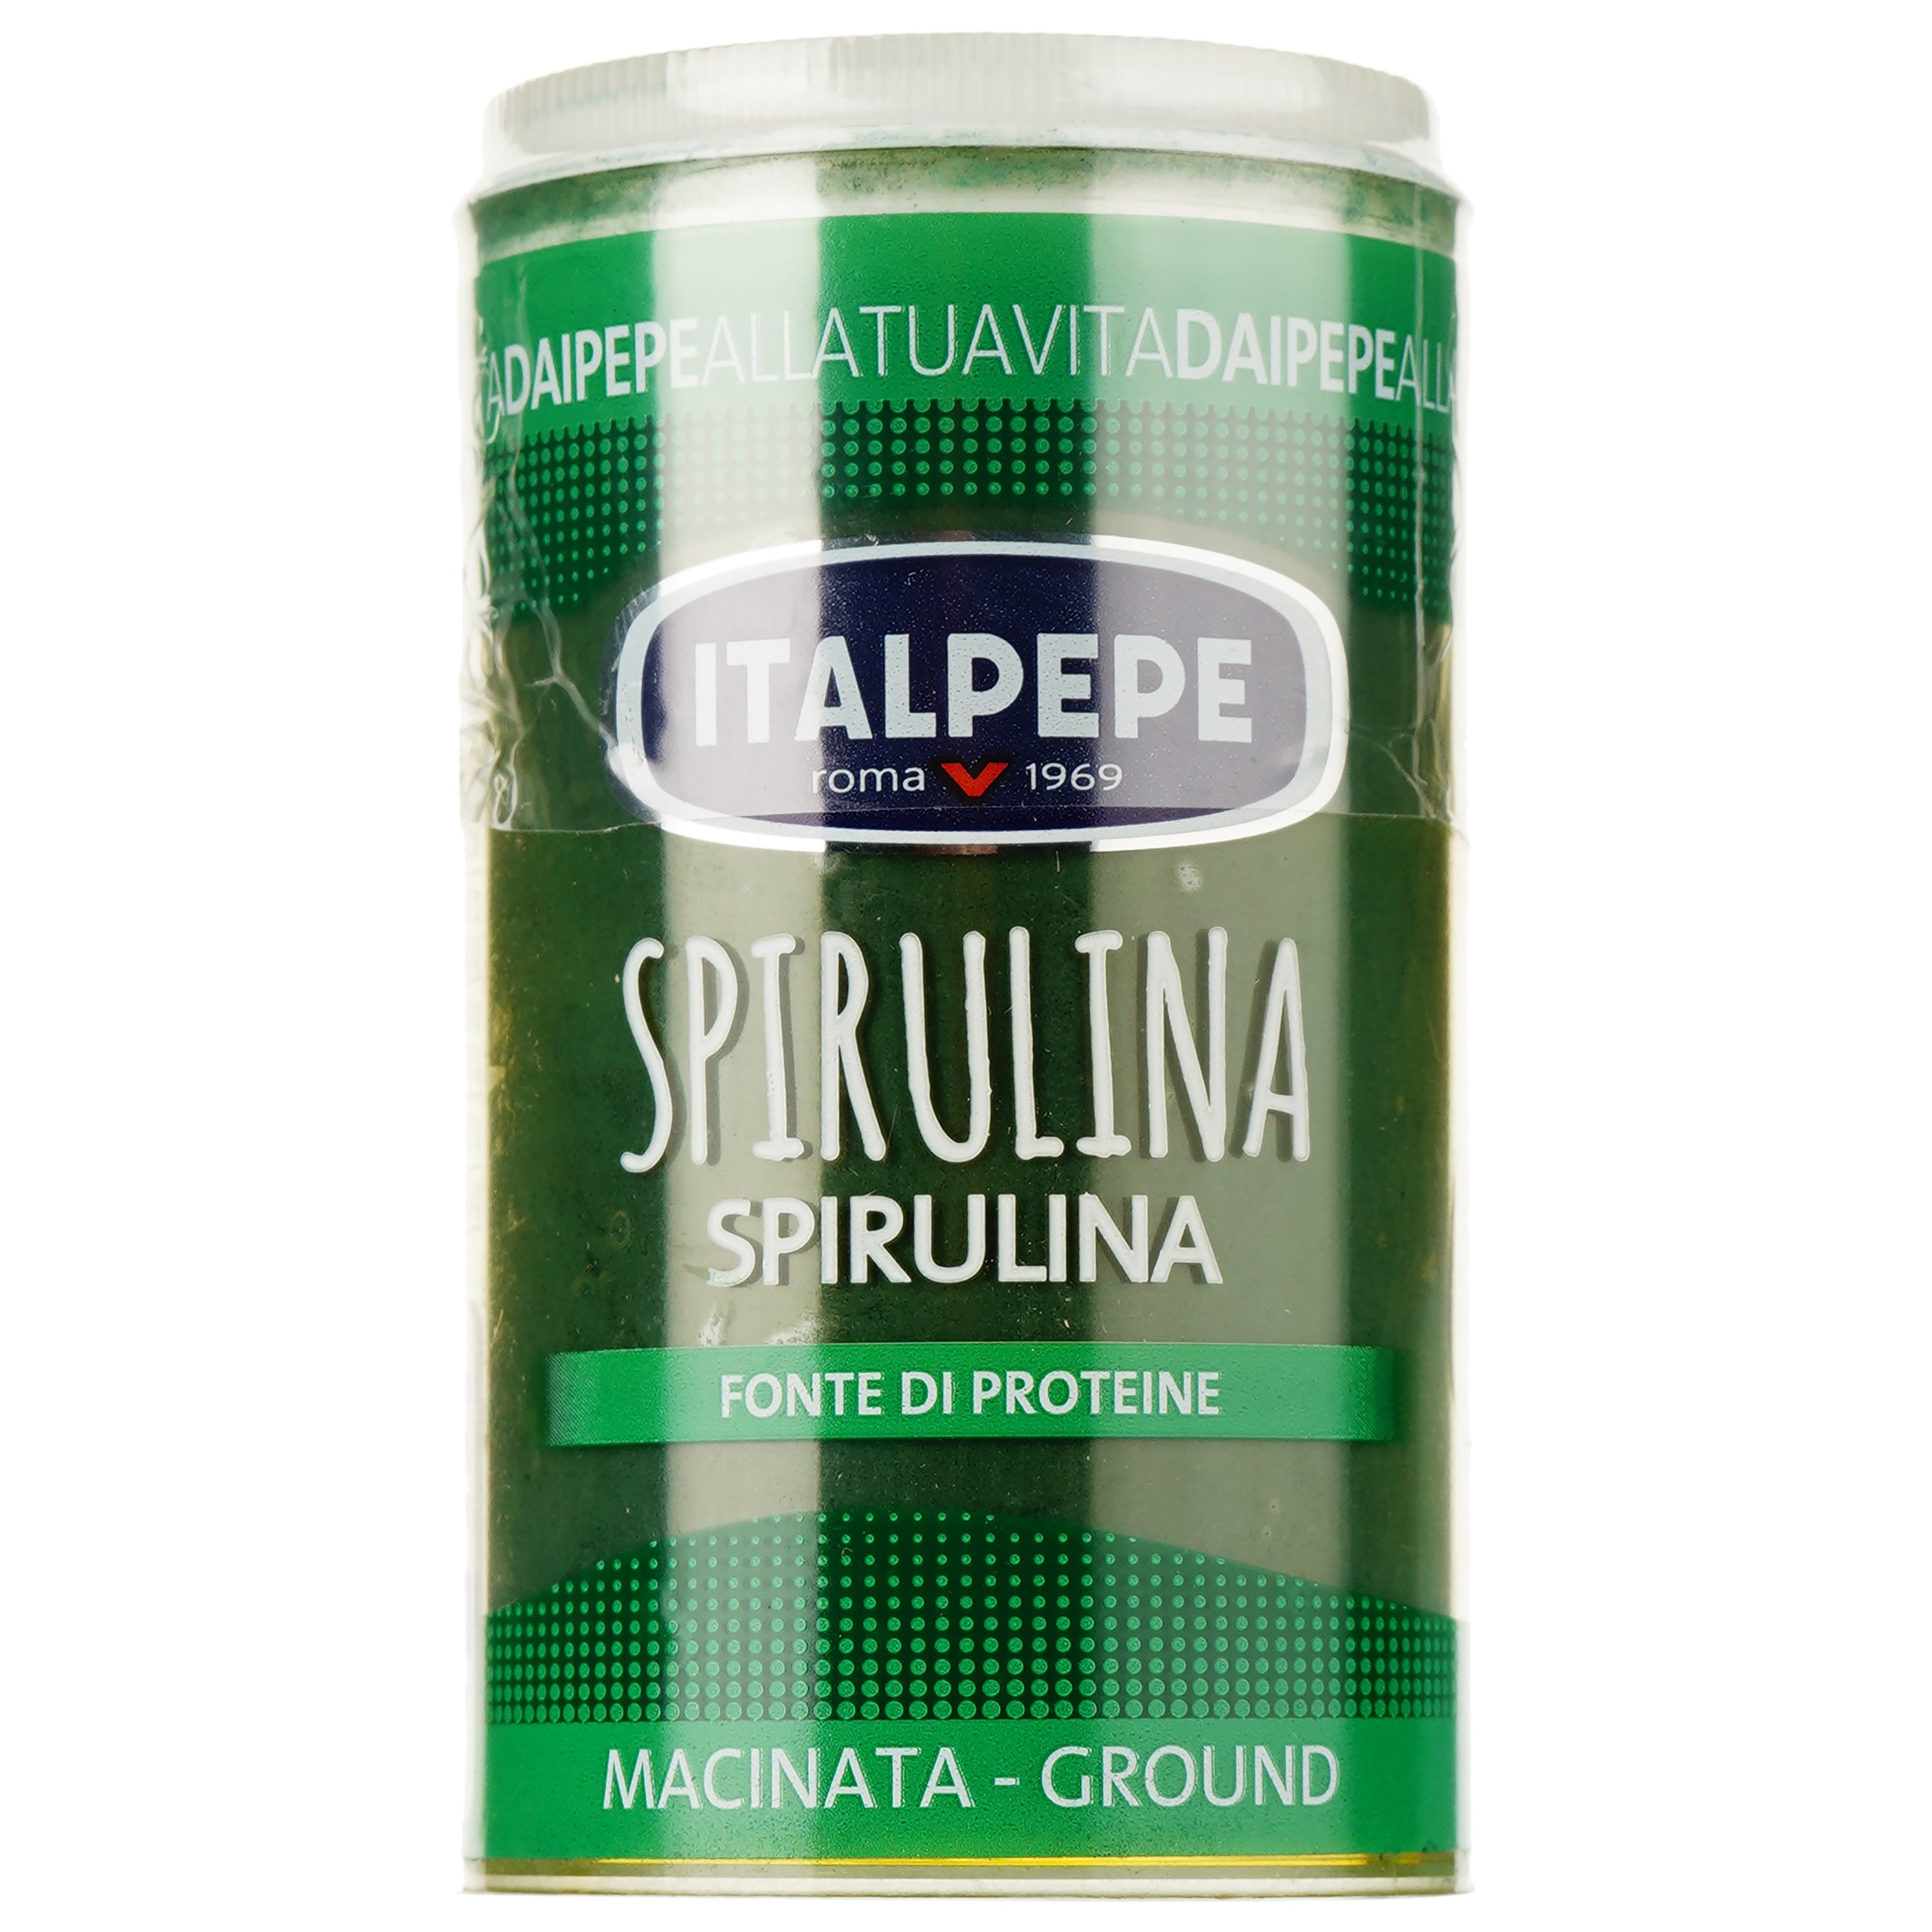 Спирулина Italpepe порошок, 60 г - фото 1